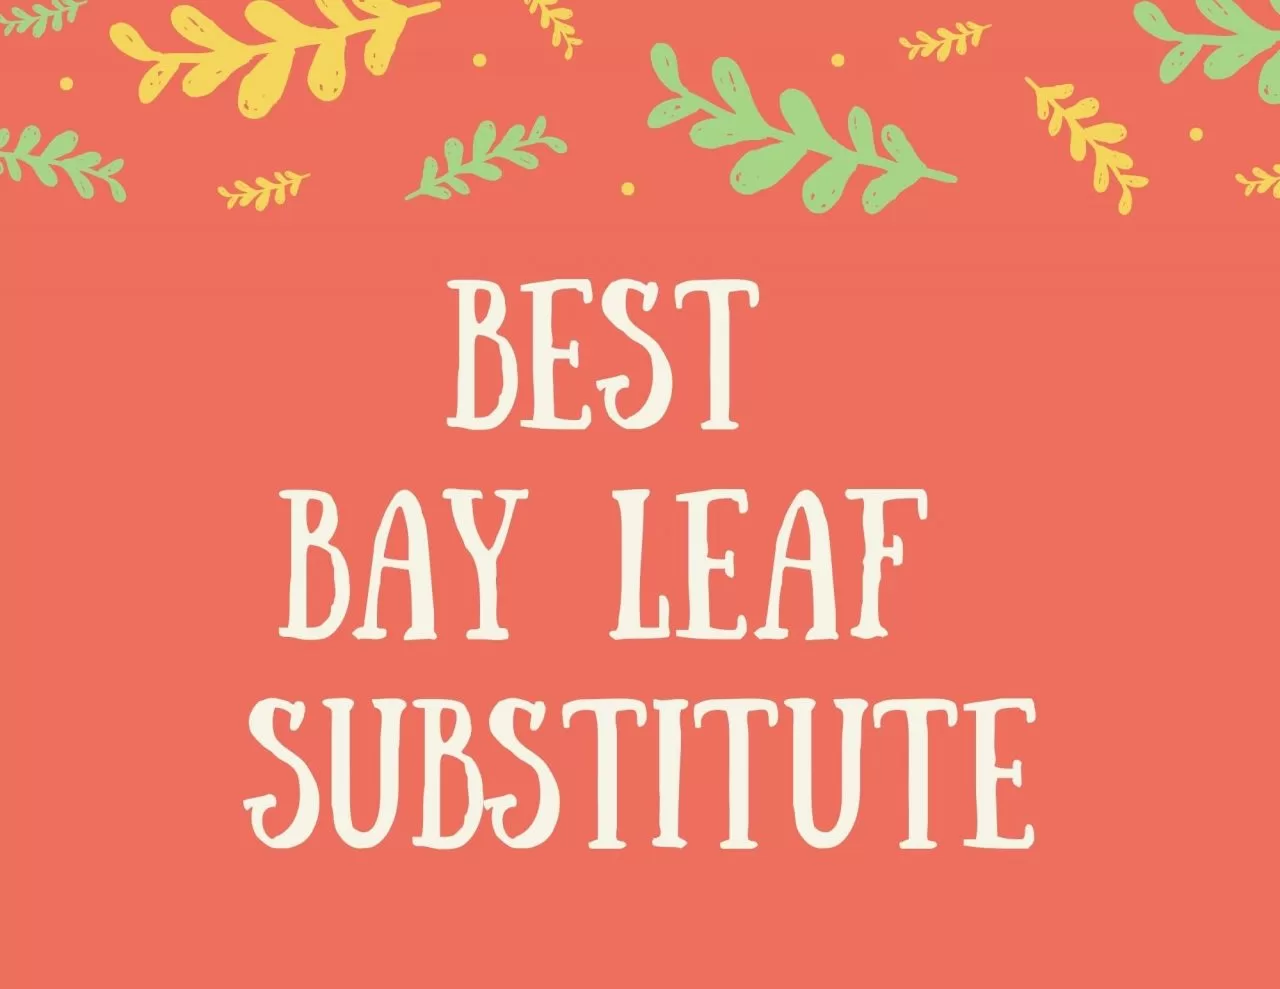 Bay Leaf Substitute